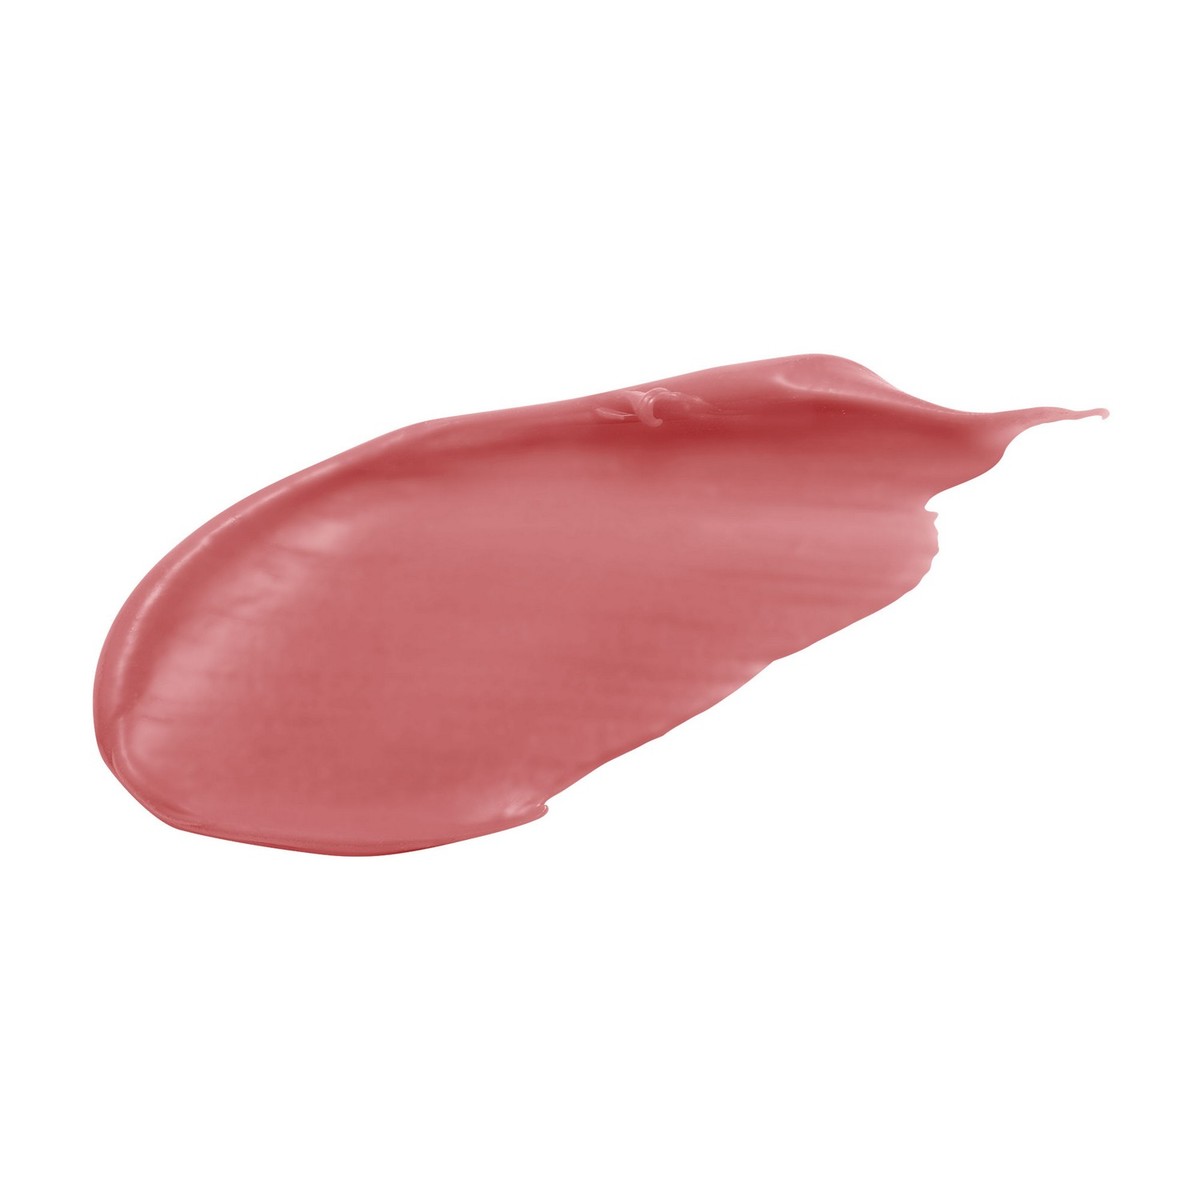 Max Factor Colour Elixir Lipstick 615 Star Dust Pink 1pc